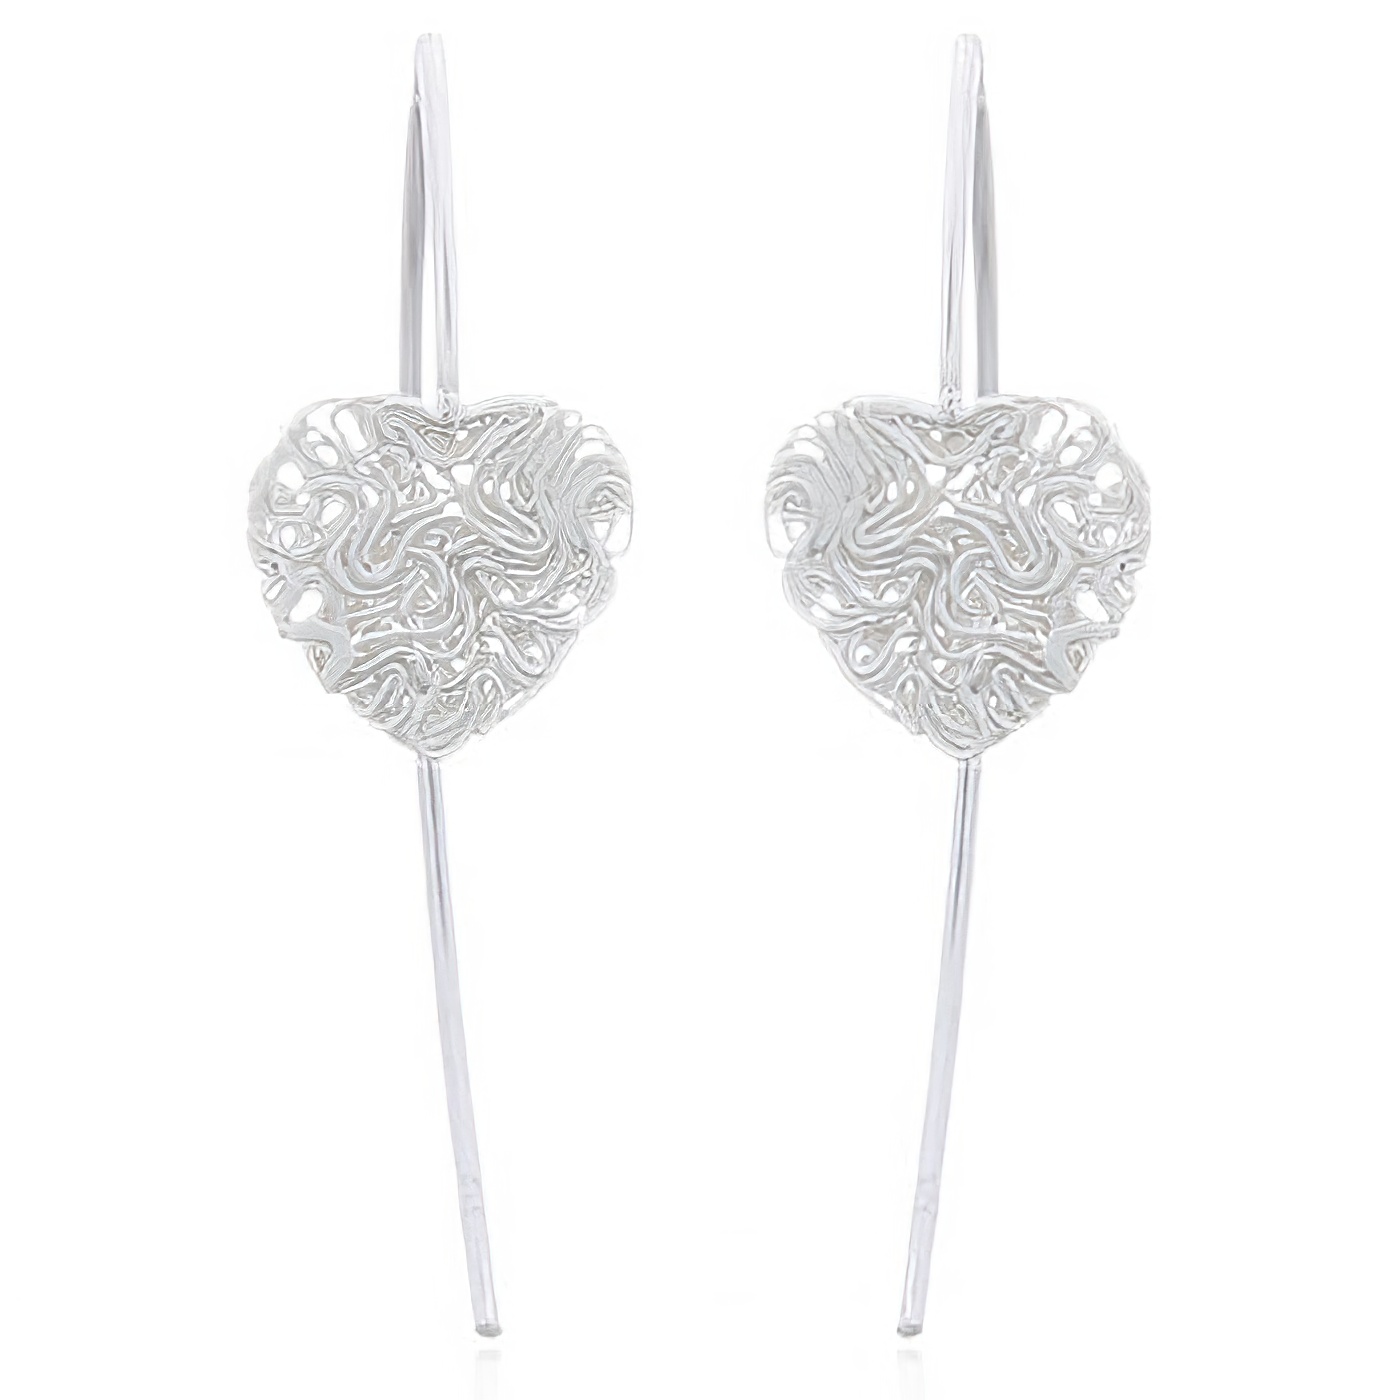 Wire Stamped Heart Sterling Silver Drop Earrings by BeYindi 